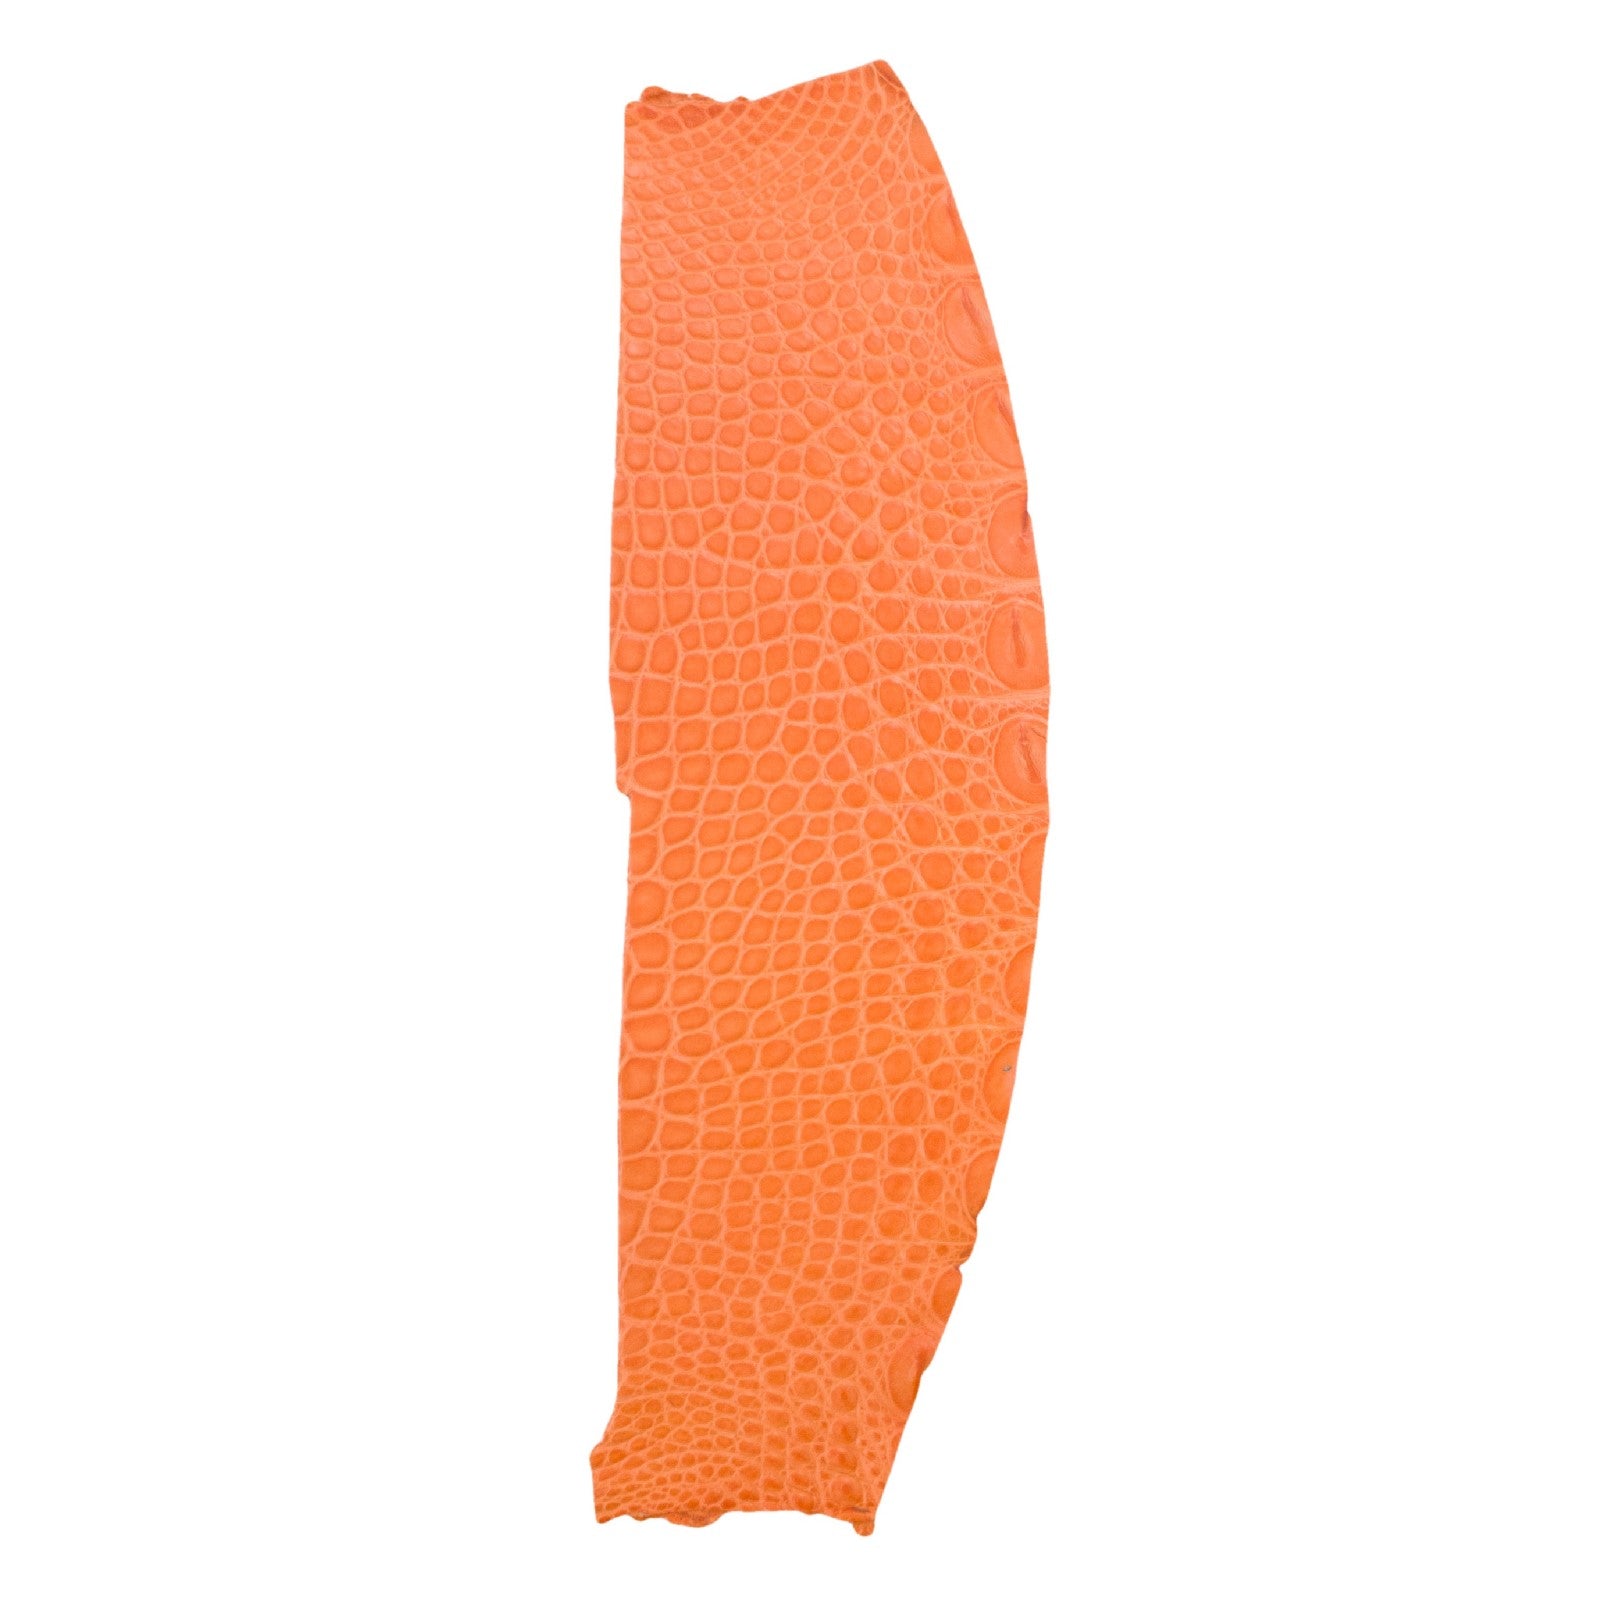 Alligator Skin Flank Various Colors Genuine Hide, Mango Orange | The Leather Guy